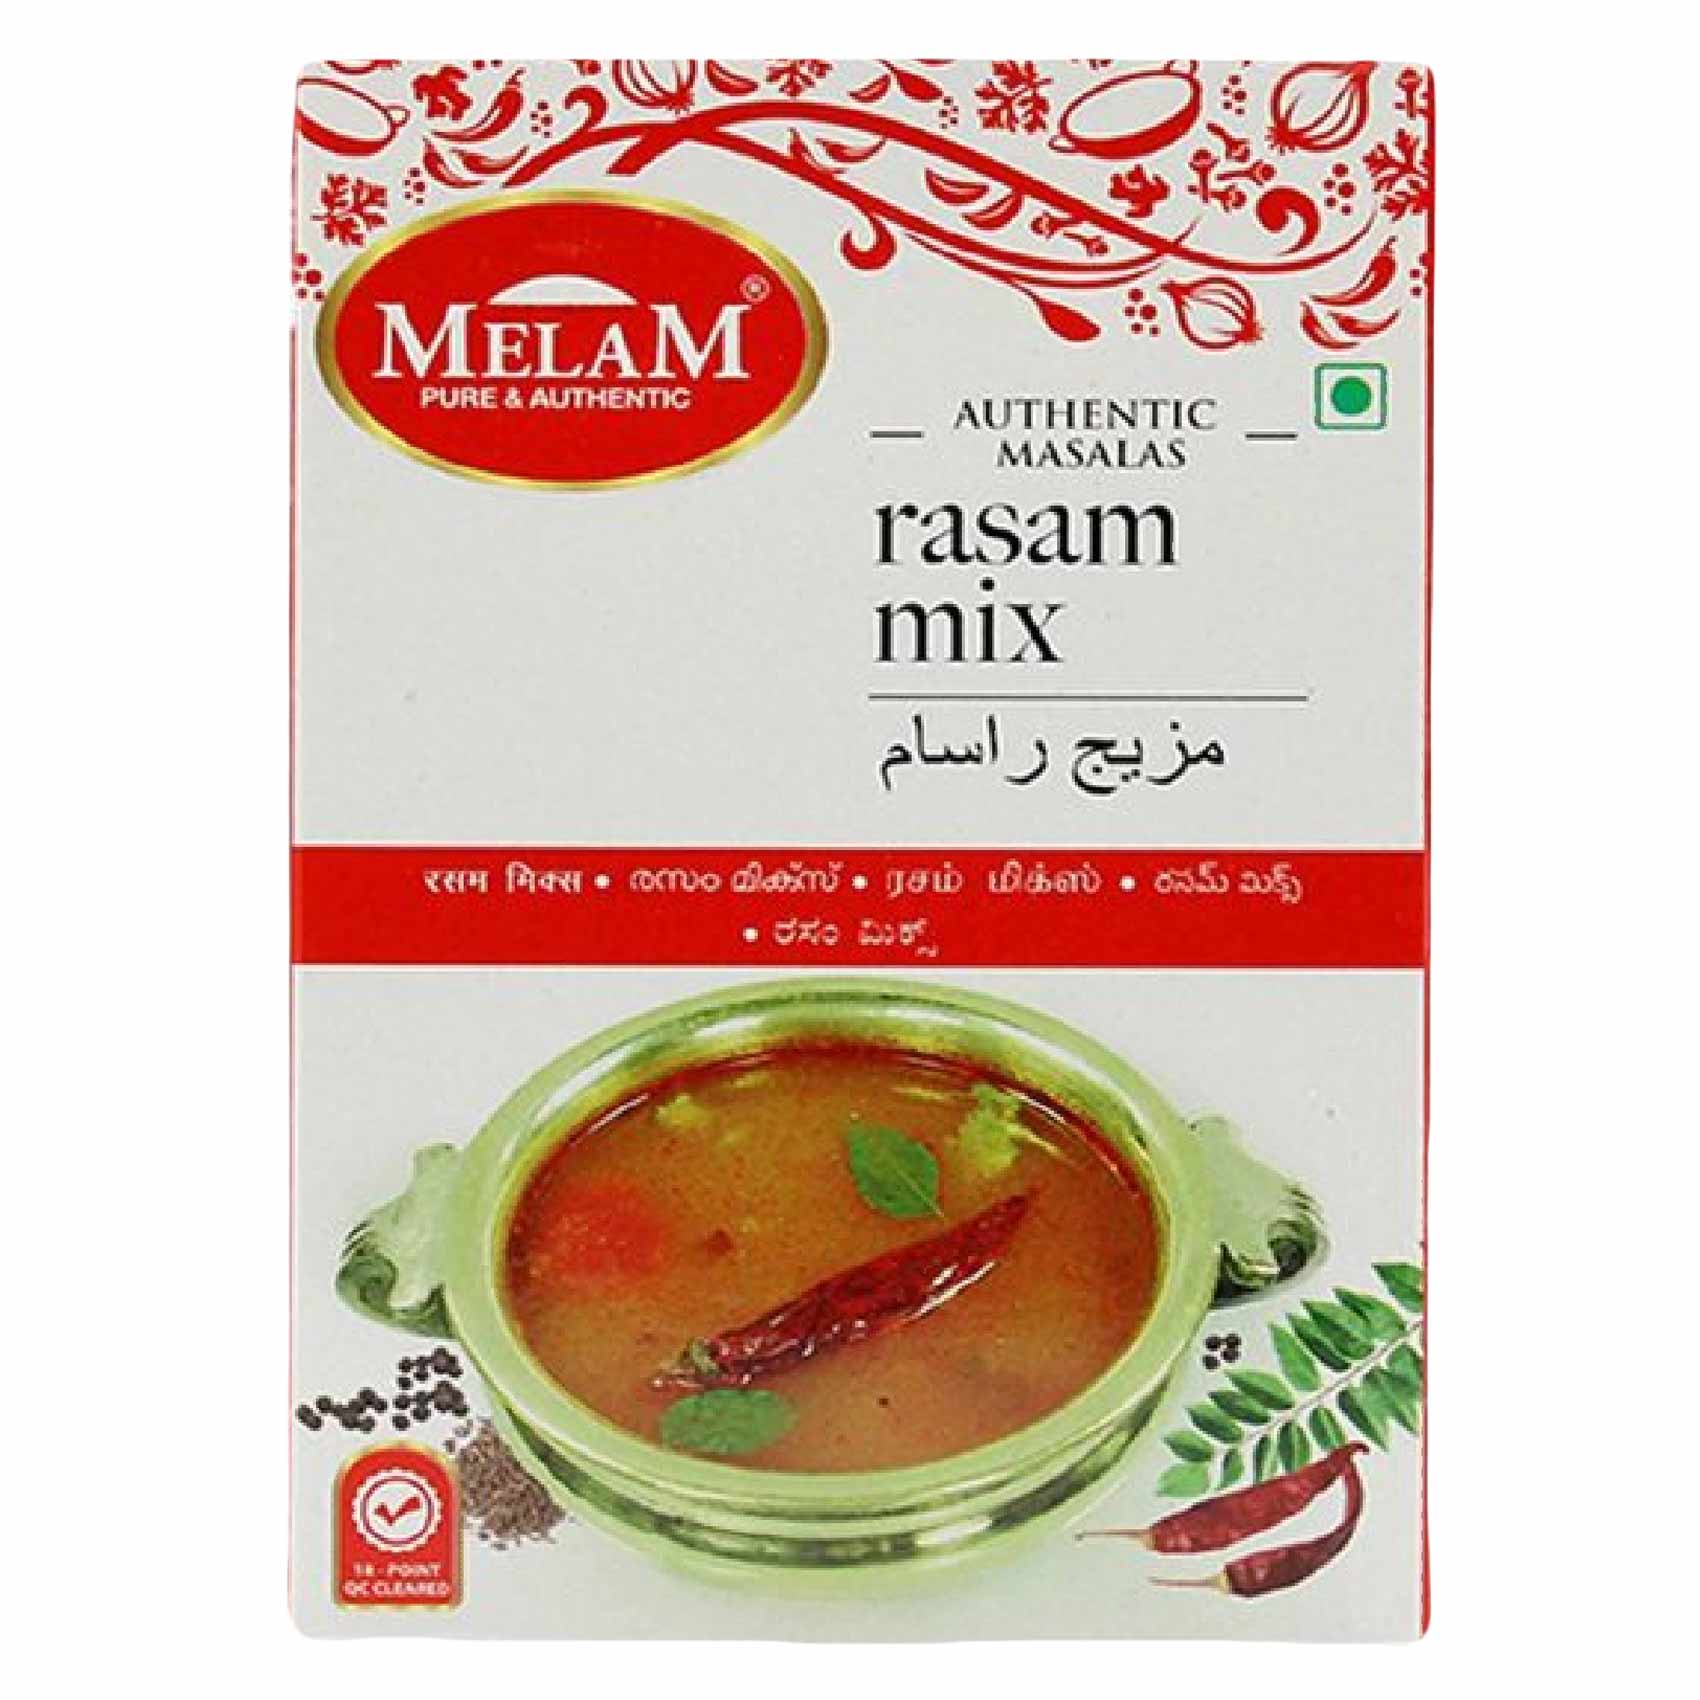 Melam Rasam Mix 200g